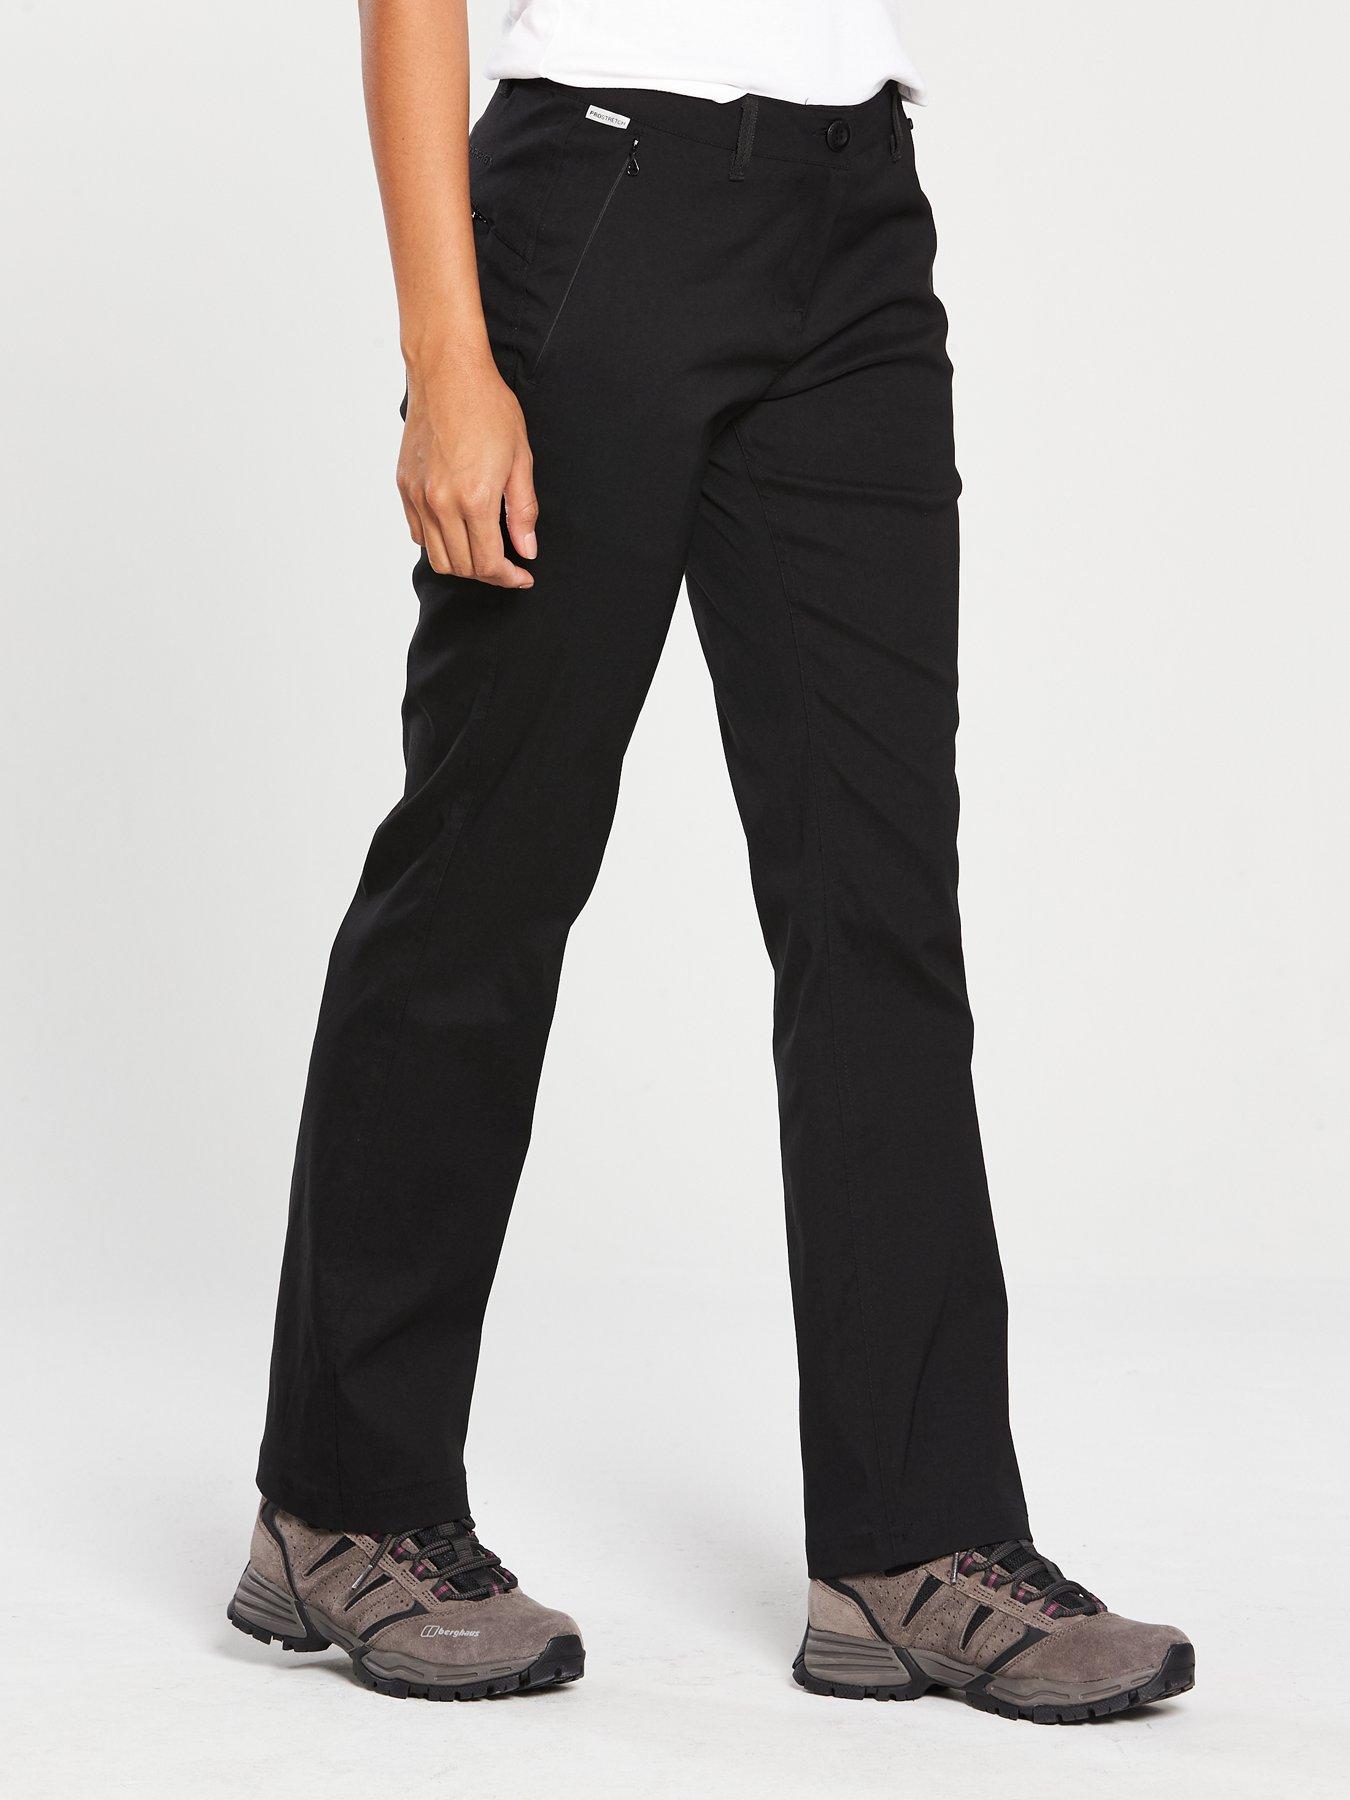 Men's Kiwi Pro II Trousers - Black